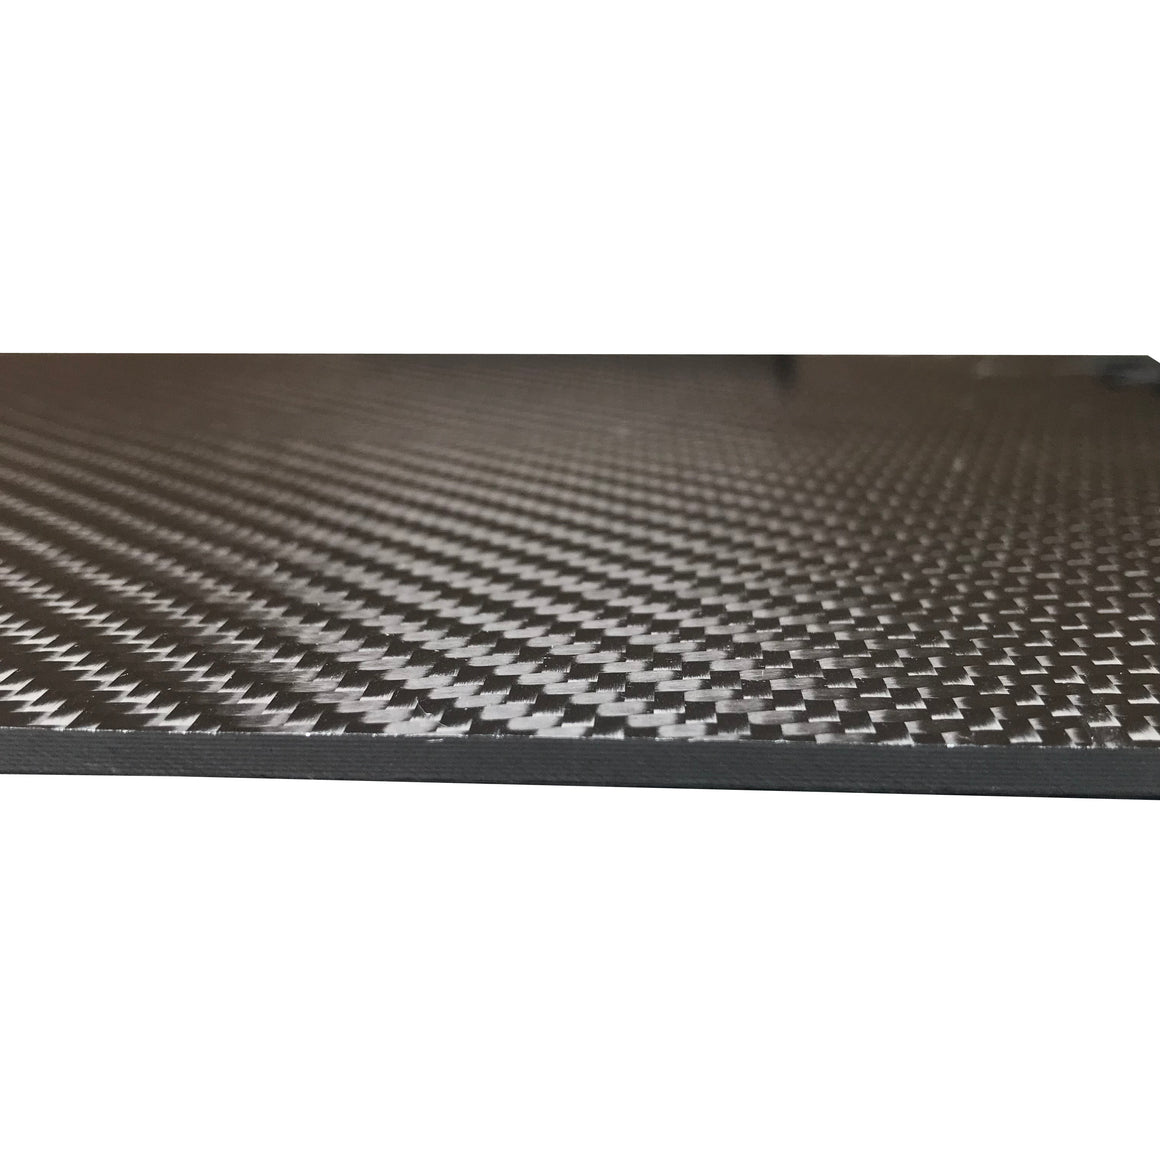 Carbon Fiber Plating  - 100mm x 250mm x 3mm - 3K Carbon Fiber Plate High Gloss Finish